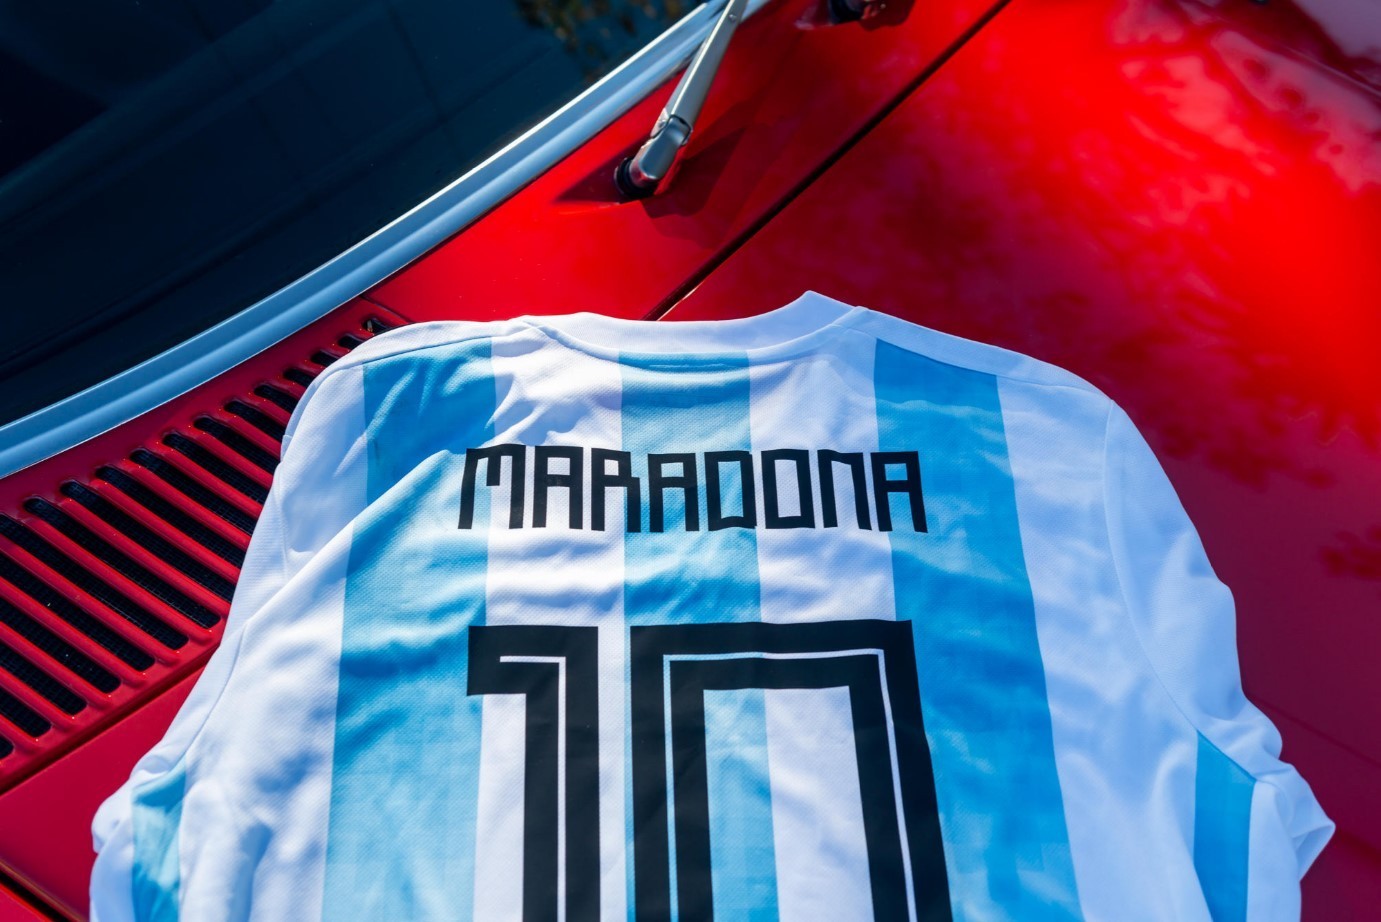 Diego Maradona's World Cup winning t-shirt on the Bonnet of his SLC.